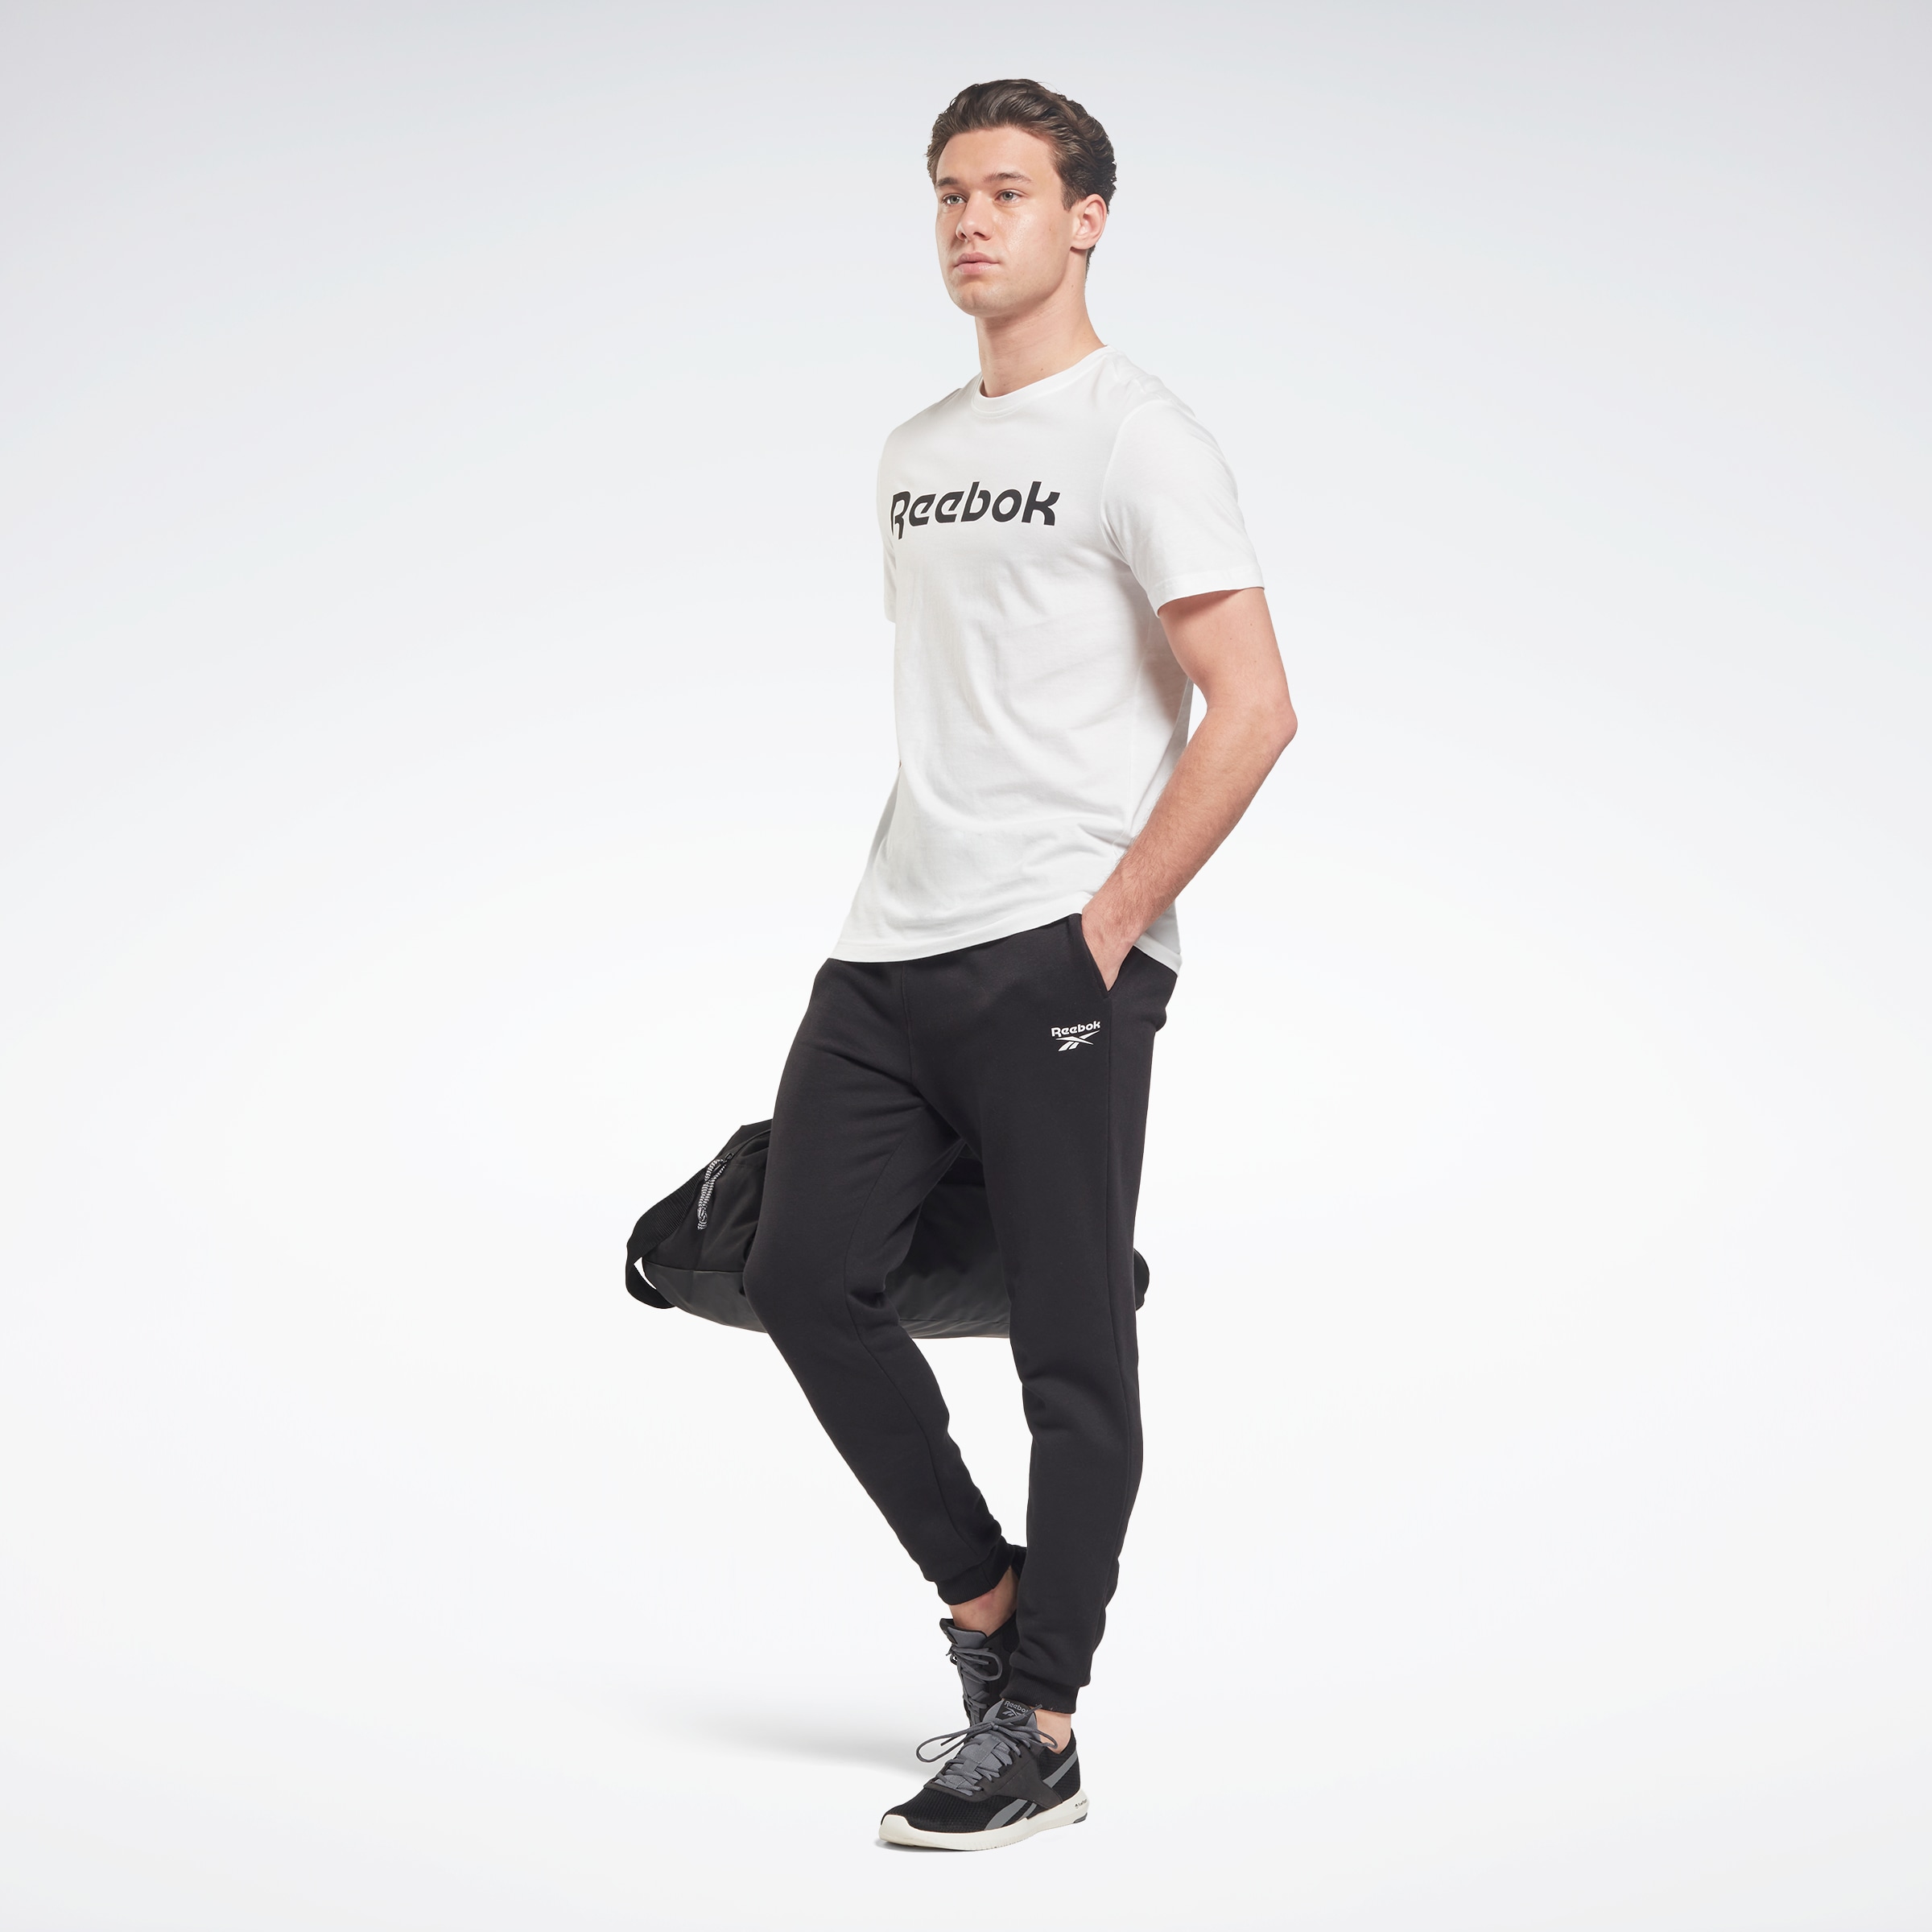 Leg »RI Reebok OTTO bestellen online Sporthose Jogger« bei Left